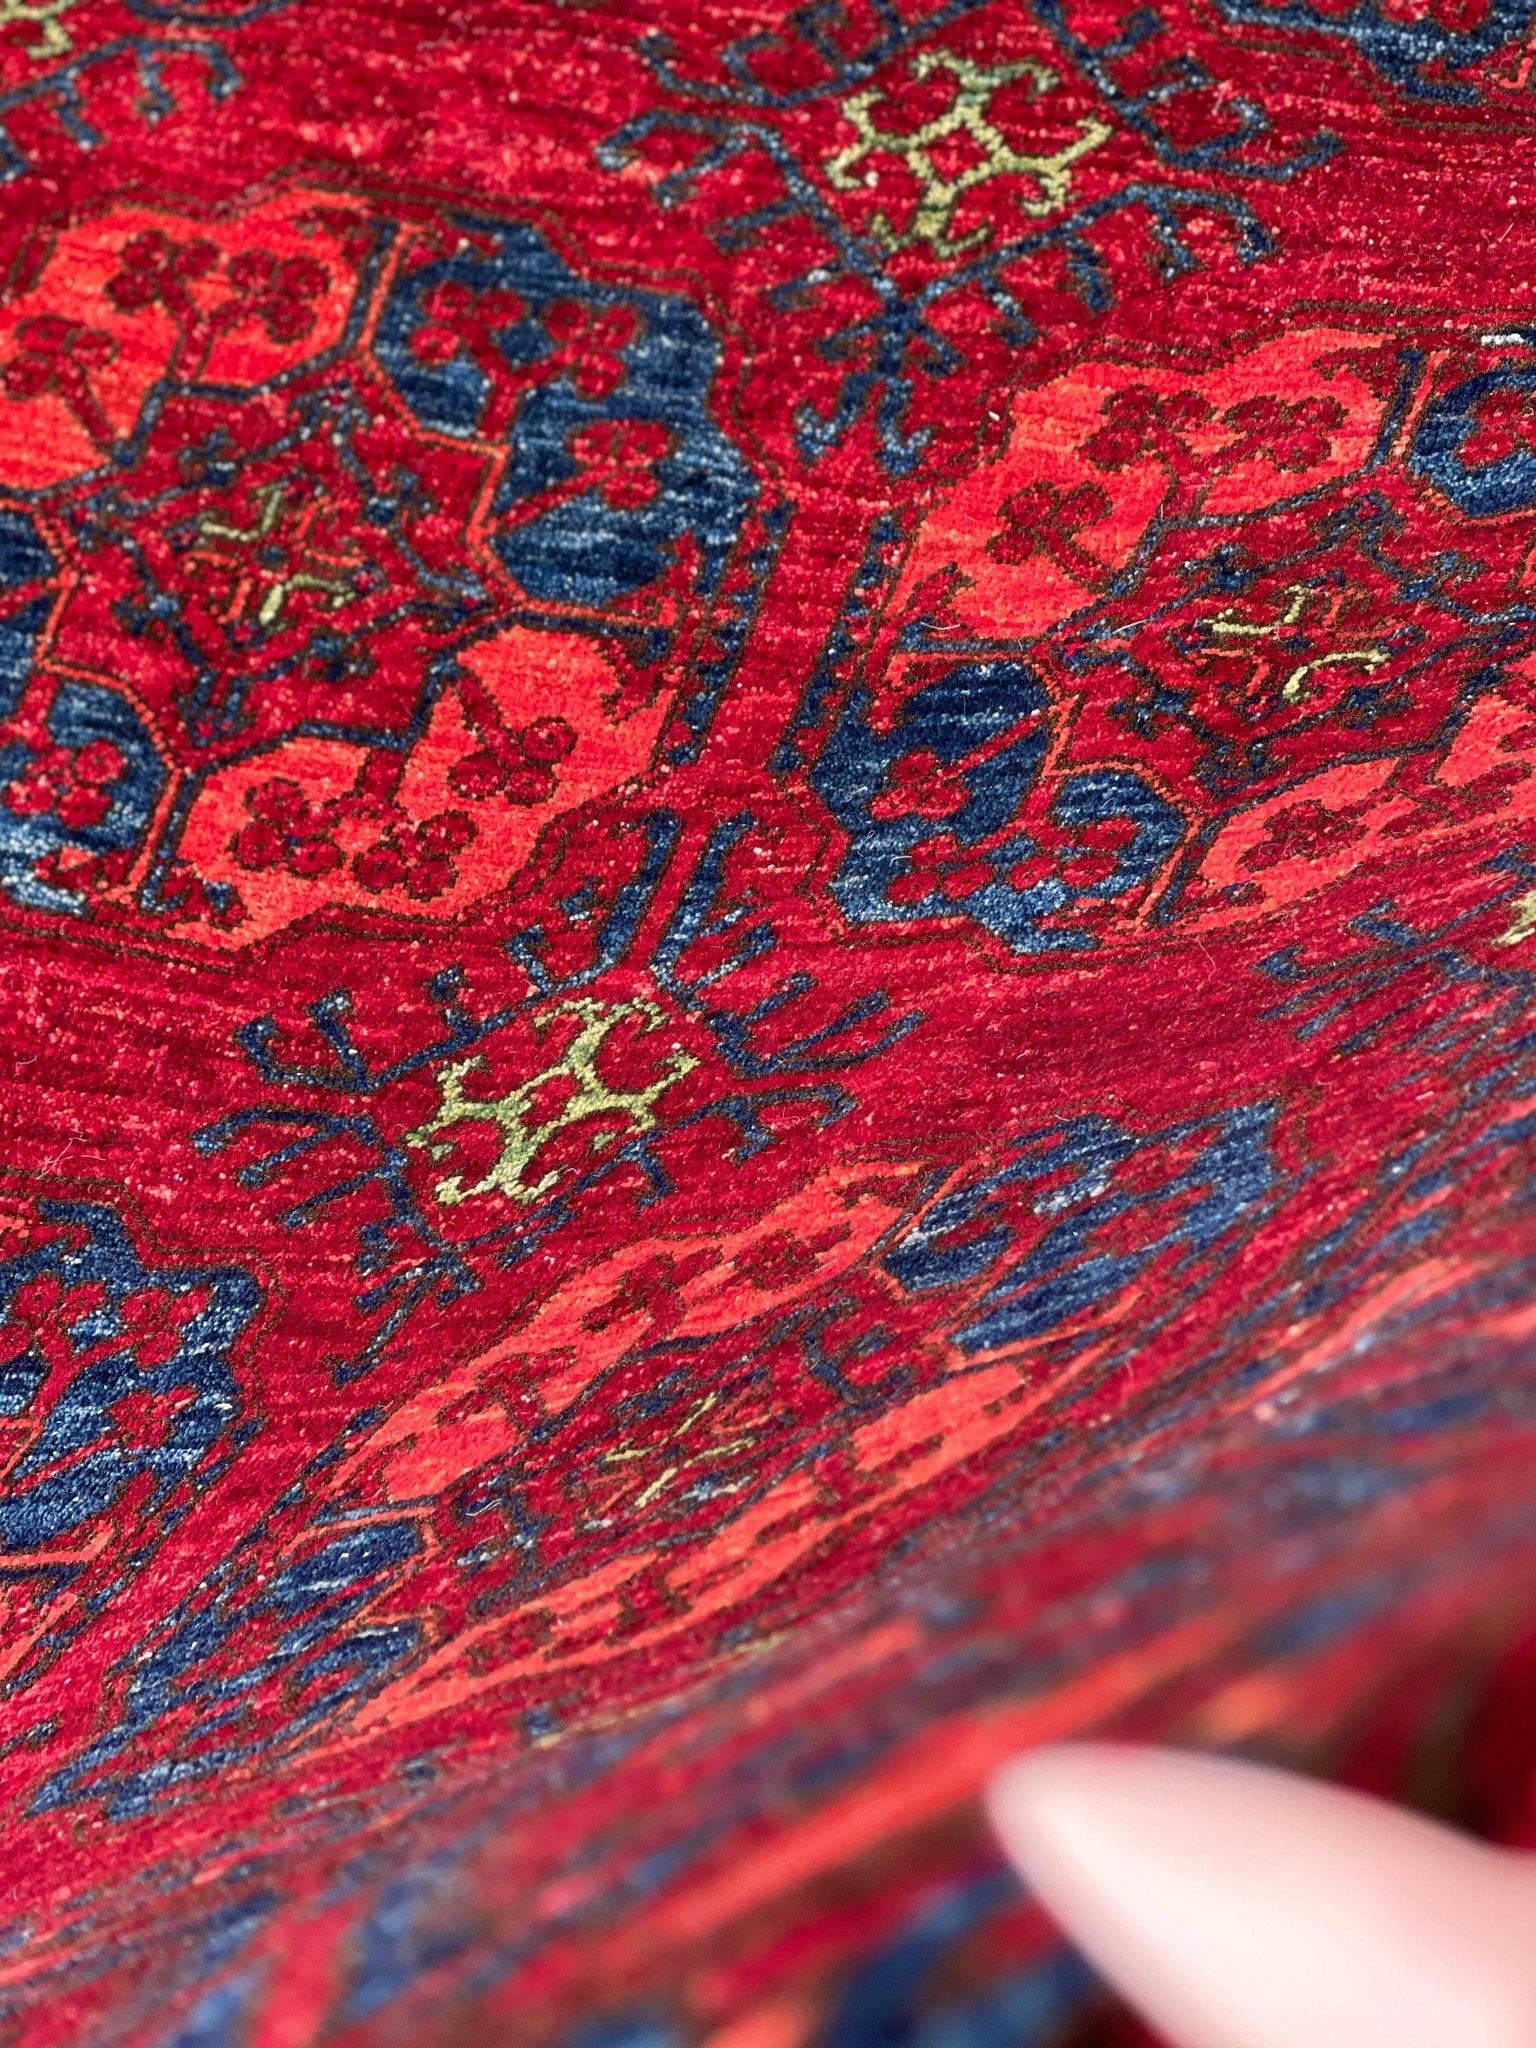 8x12 (250x350) Handmade Afghan Rug | Red Blue Orange Green | Turkish Oushak Persian Tribal Oriental Boho Wool Turkmen Turkoman Elephant Foot